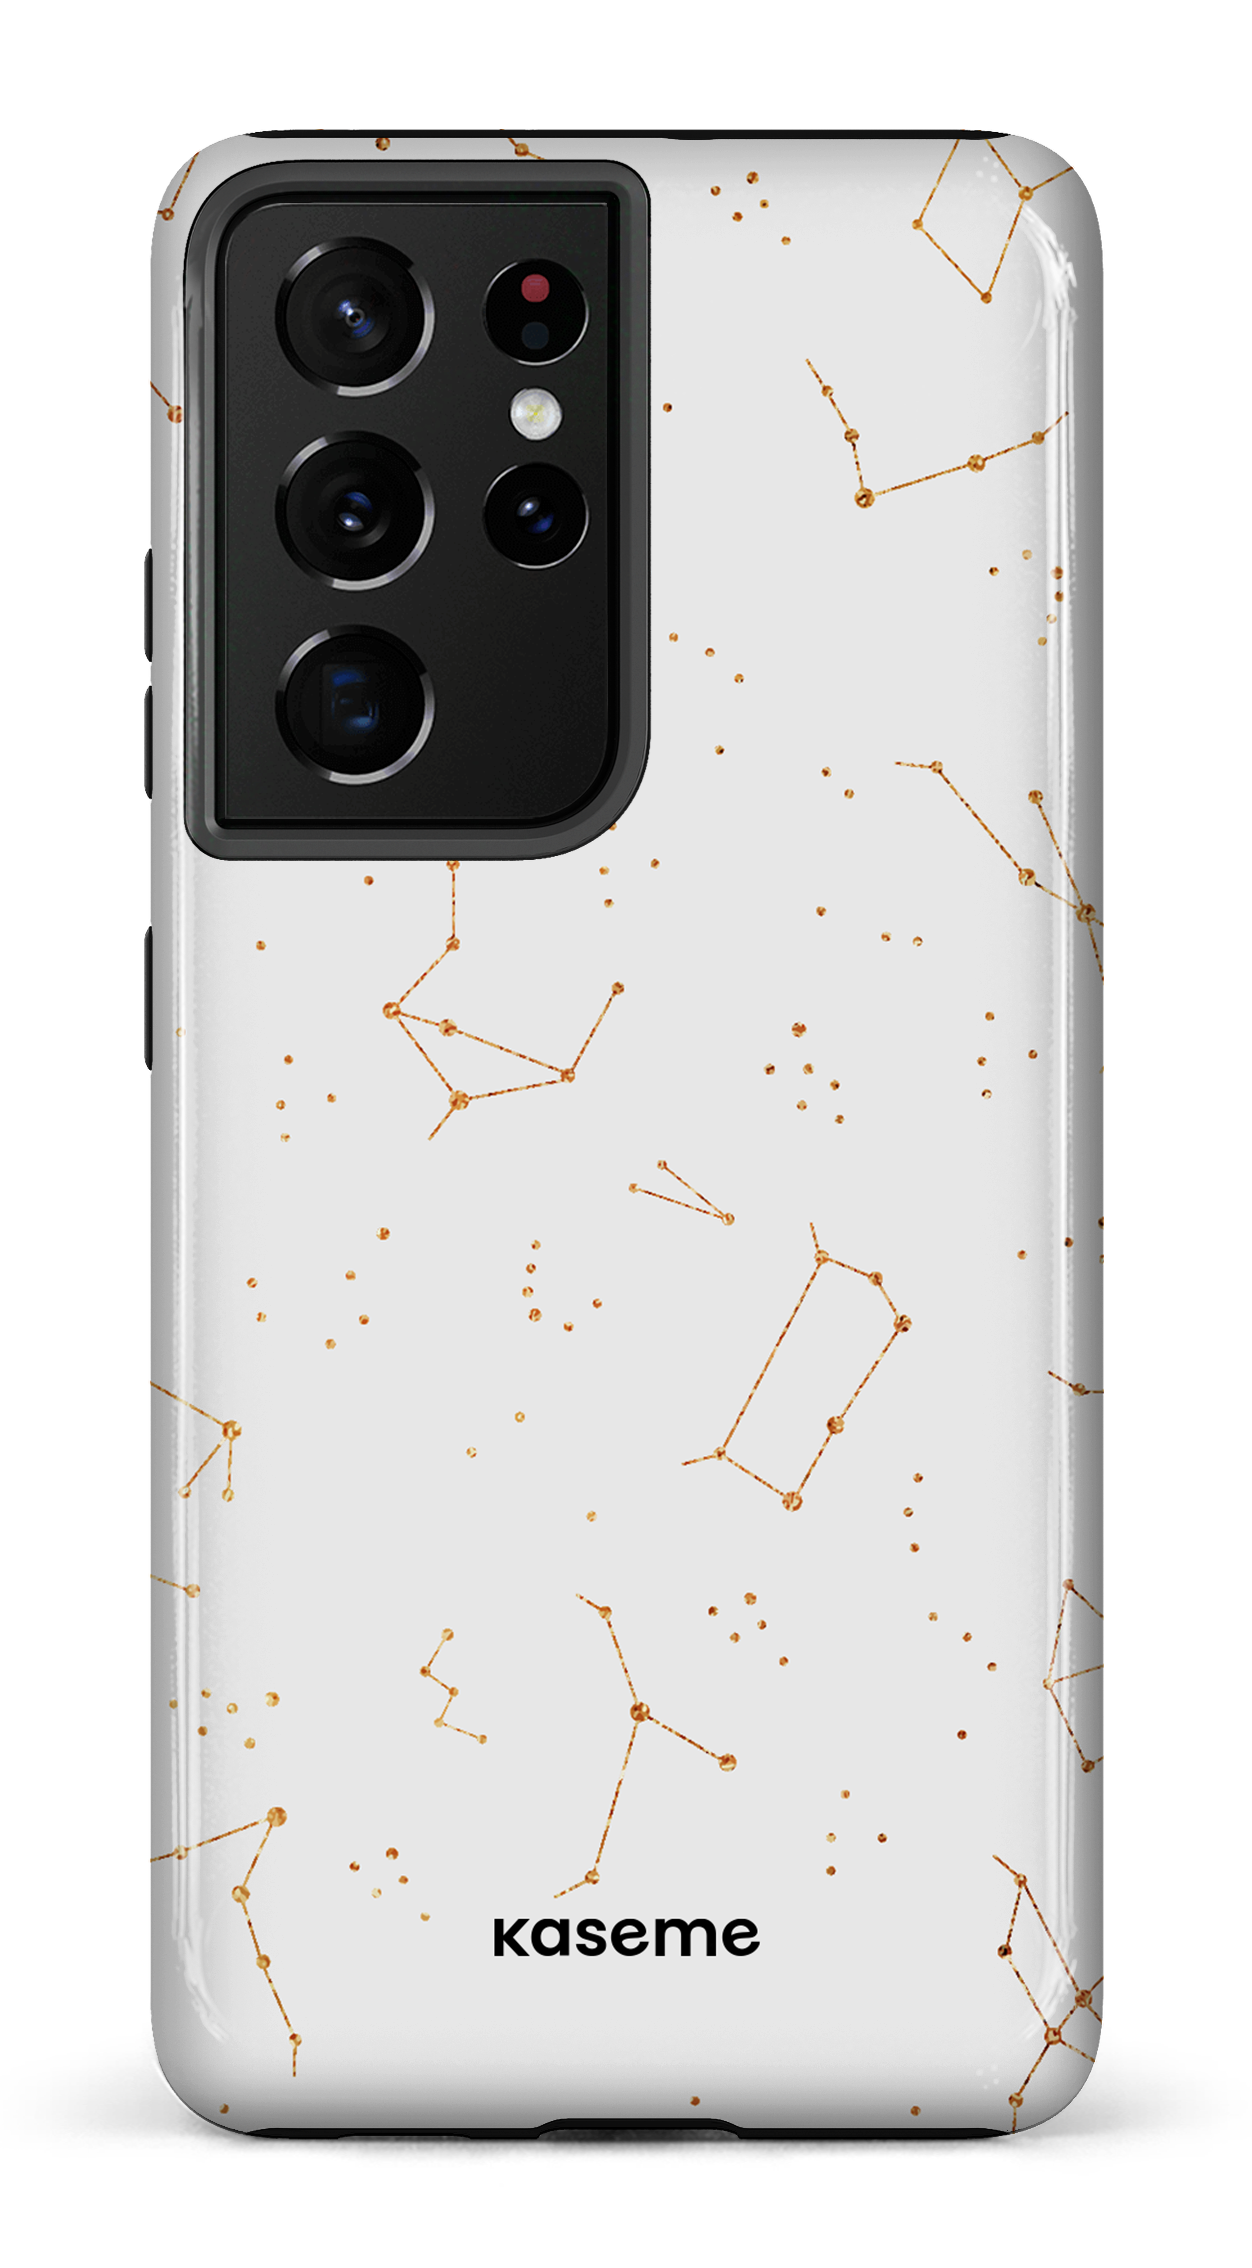 Stardust sky - Galaxy S21 Ultra